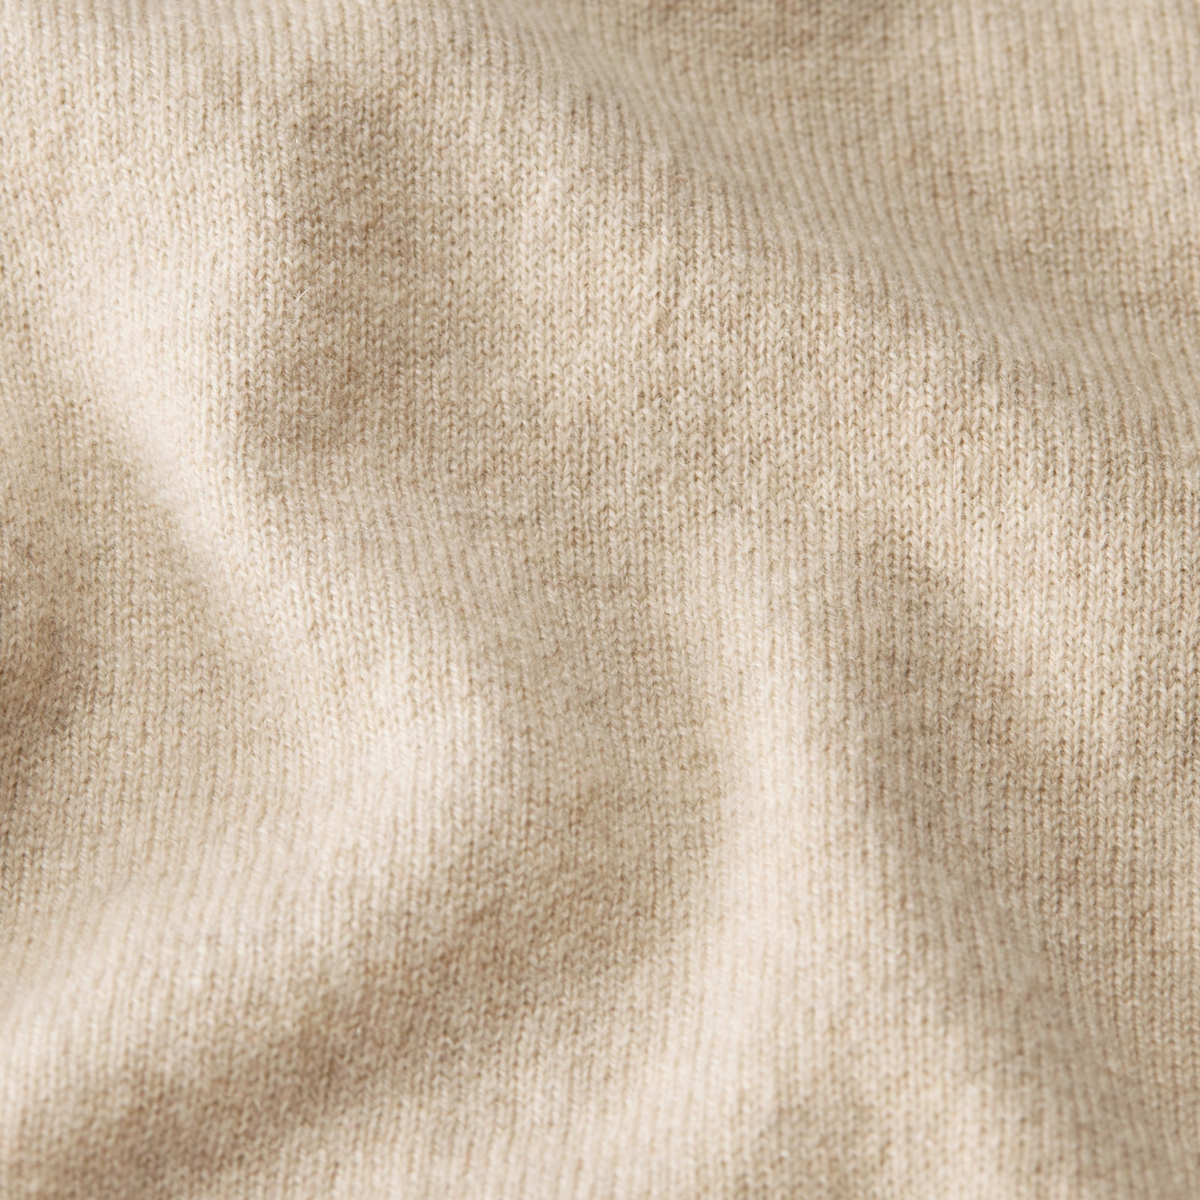 Fabric Closeup of Tan Sferra Intimita Hoodie